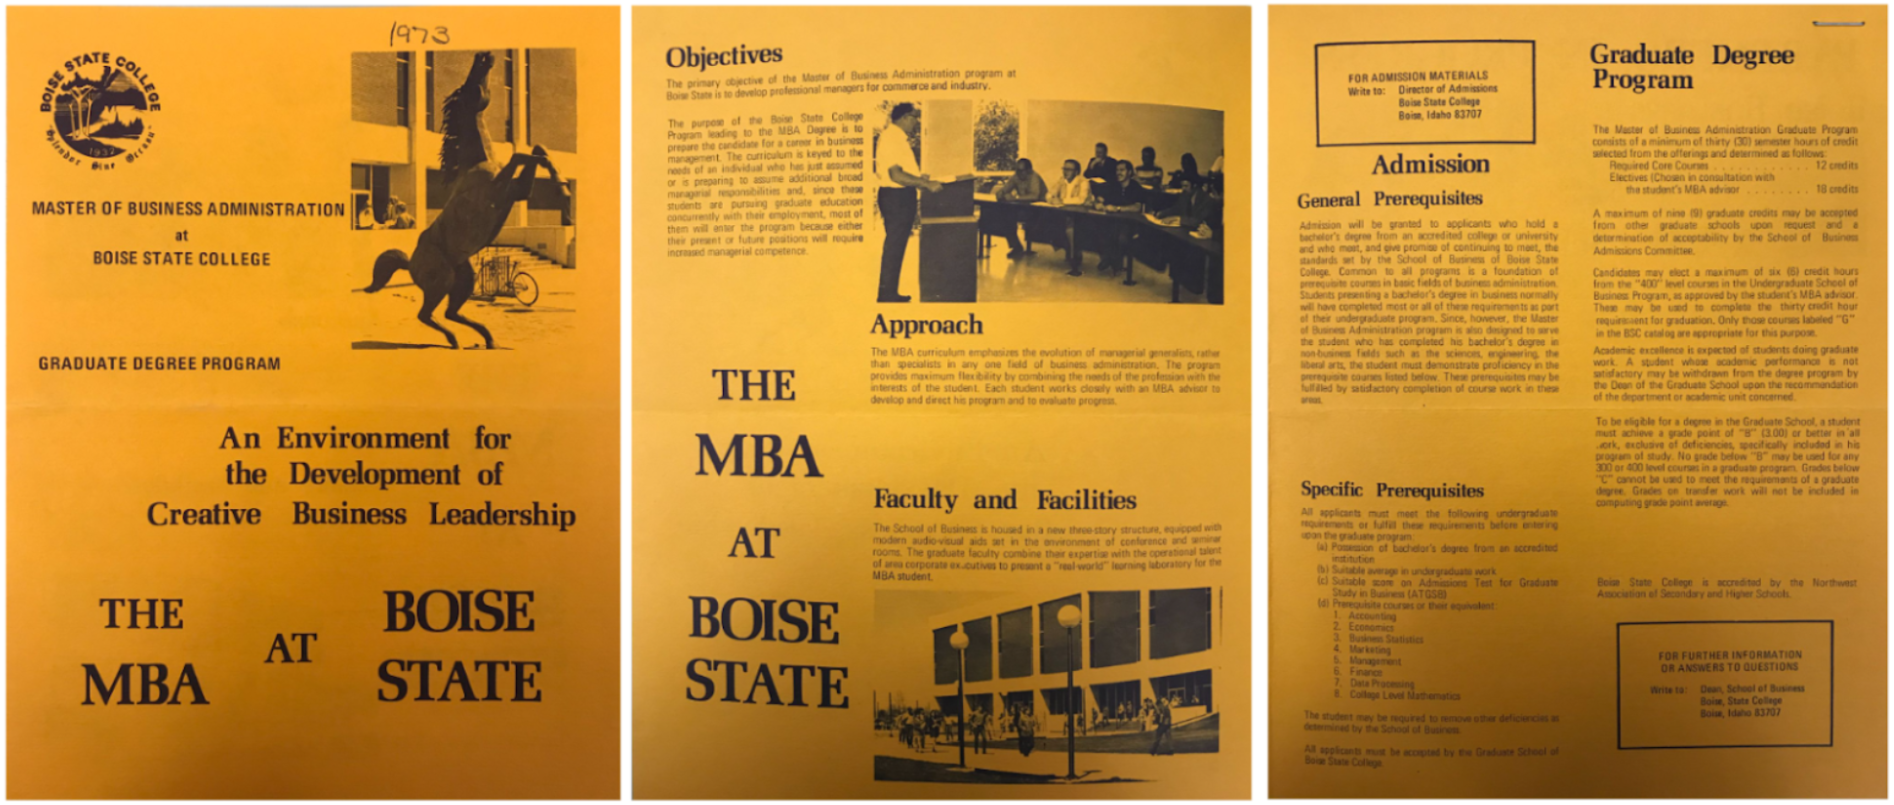 MBA Program flier, 1973.